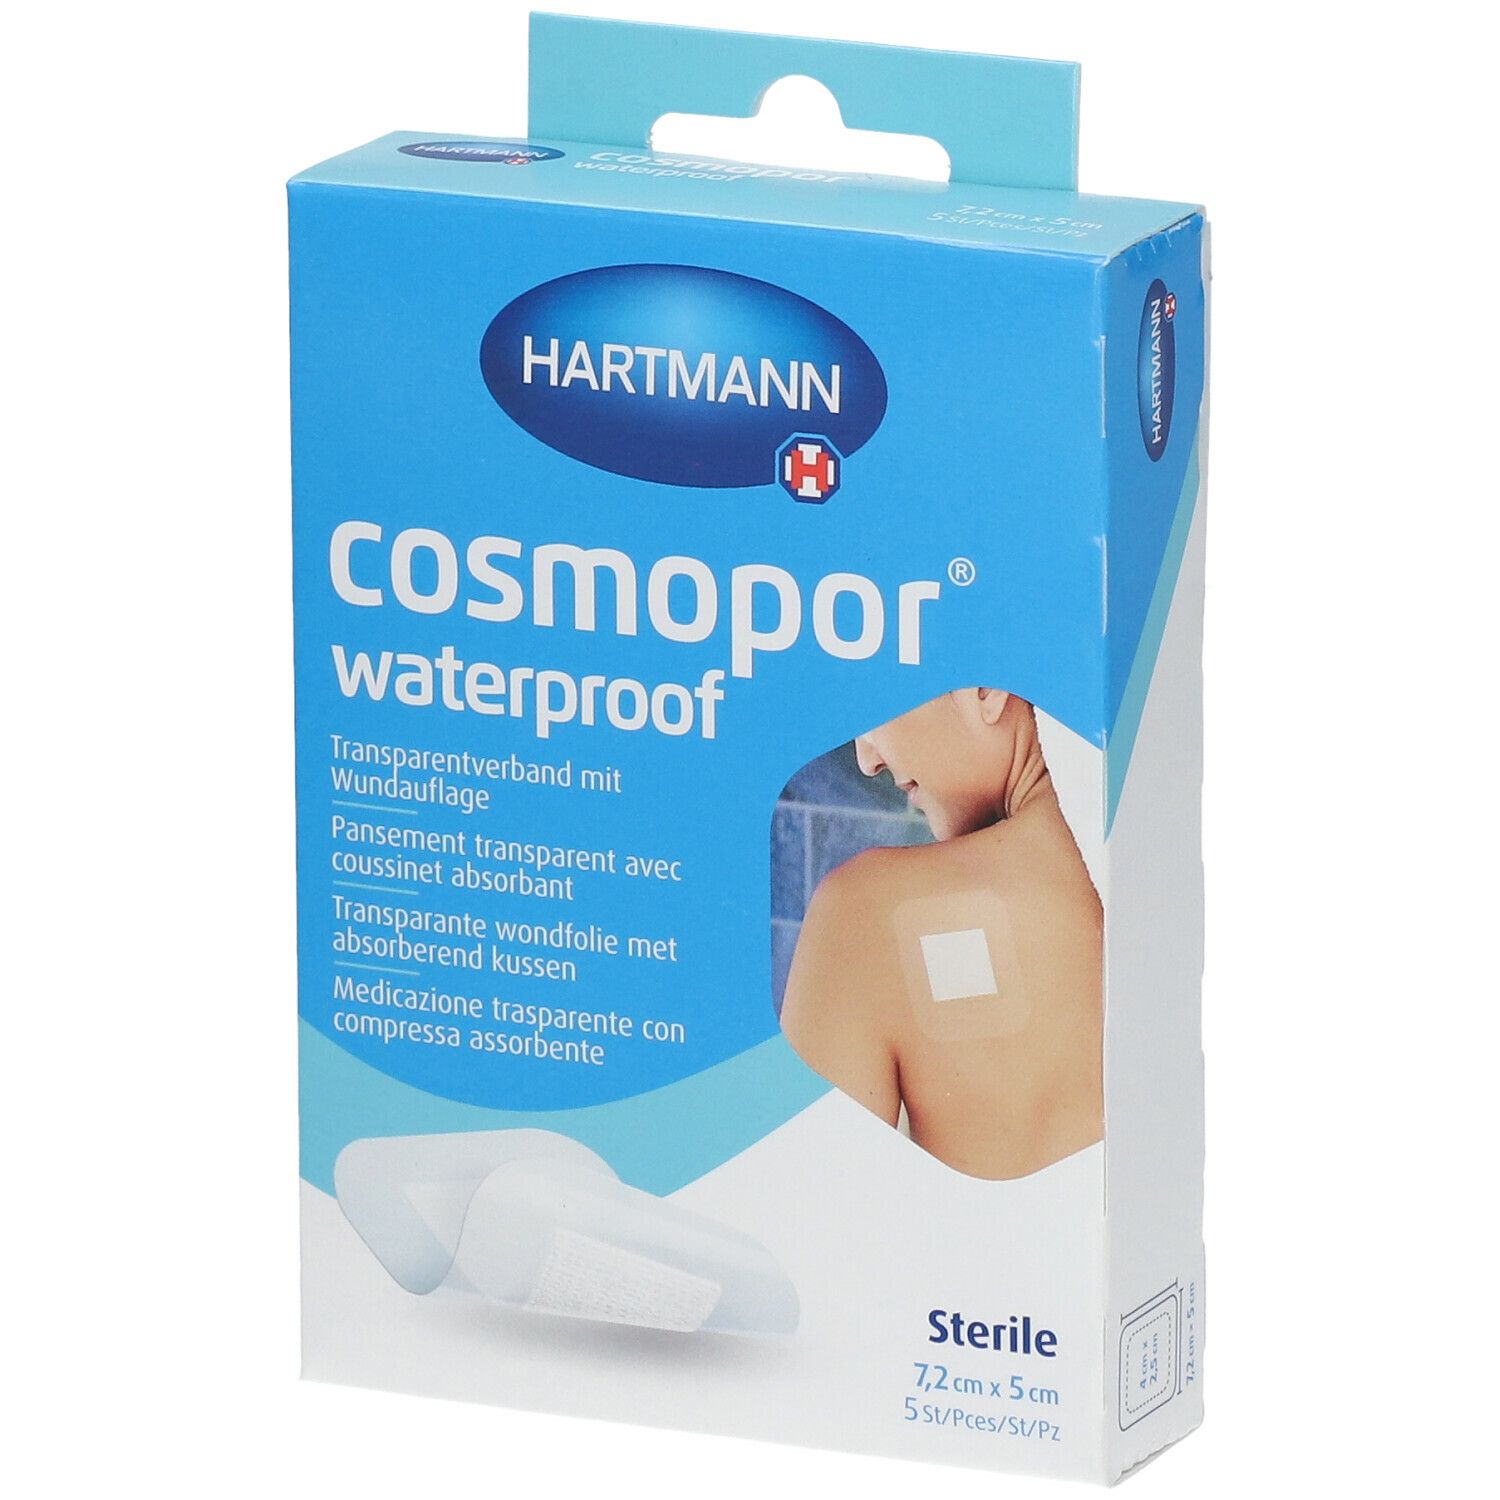 Cosmopor waterproof 7*2 x 5